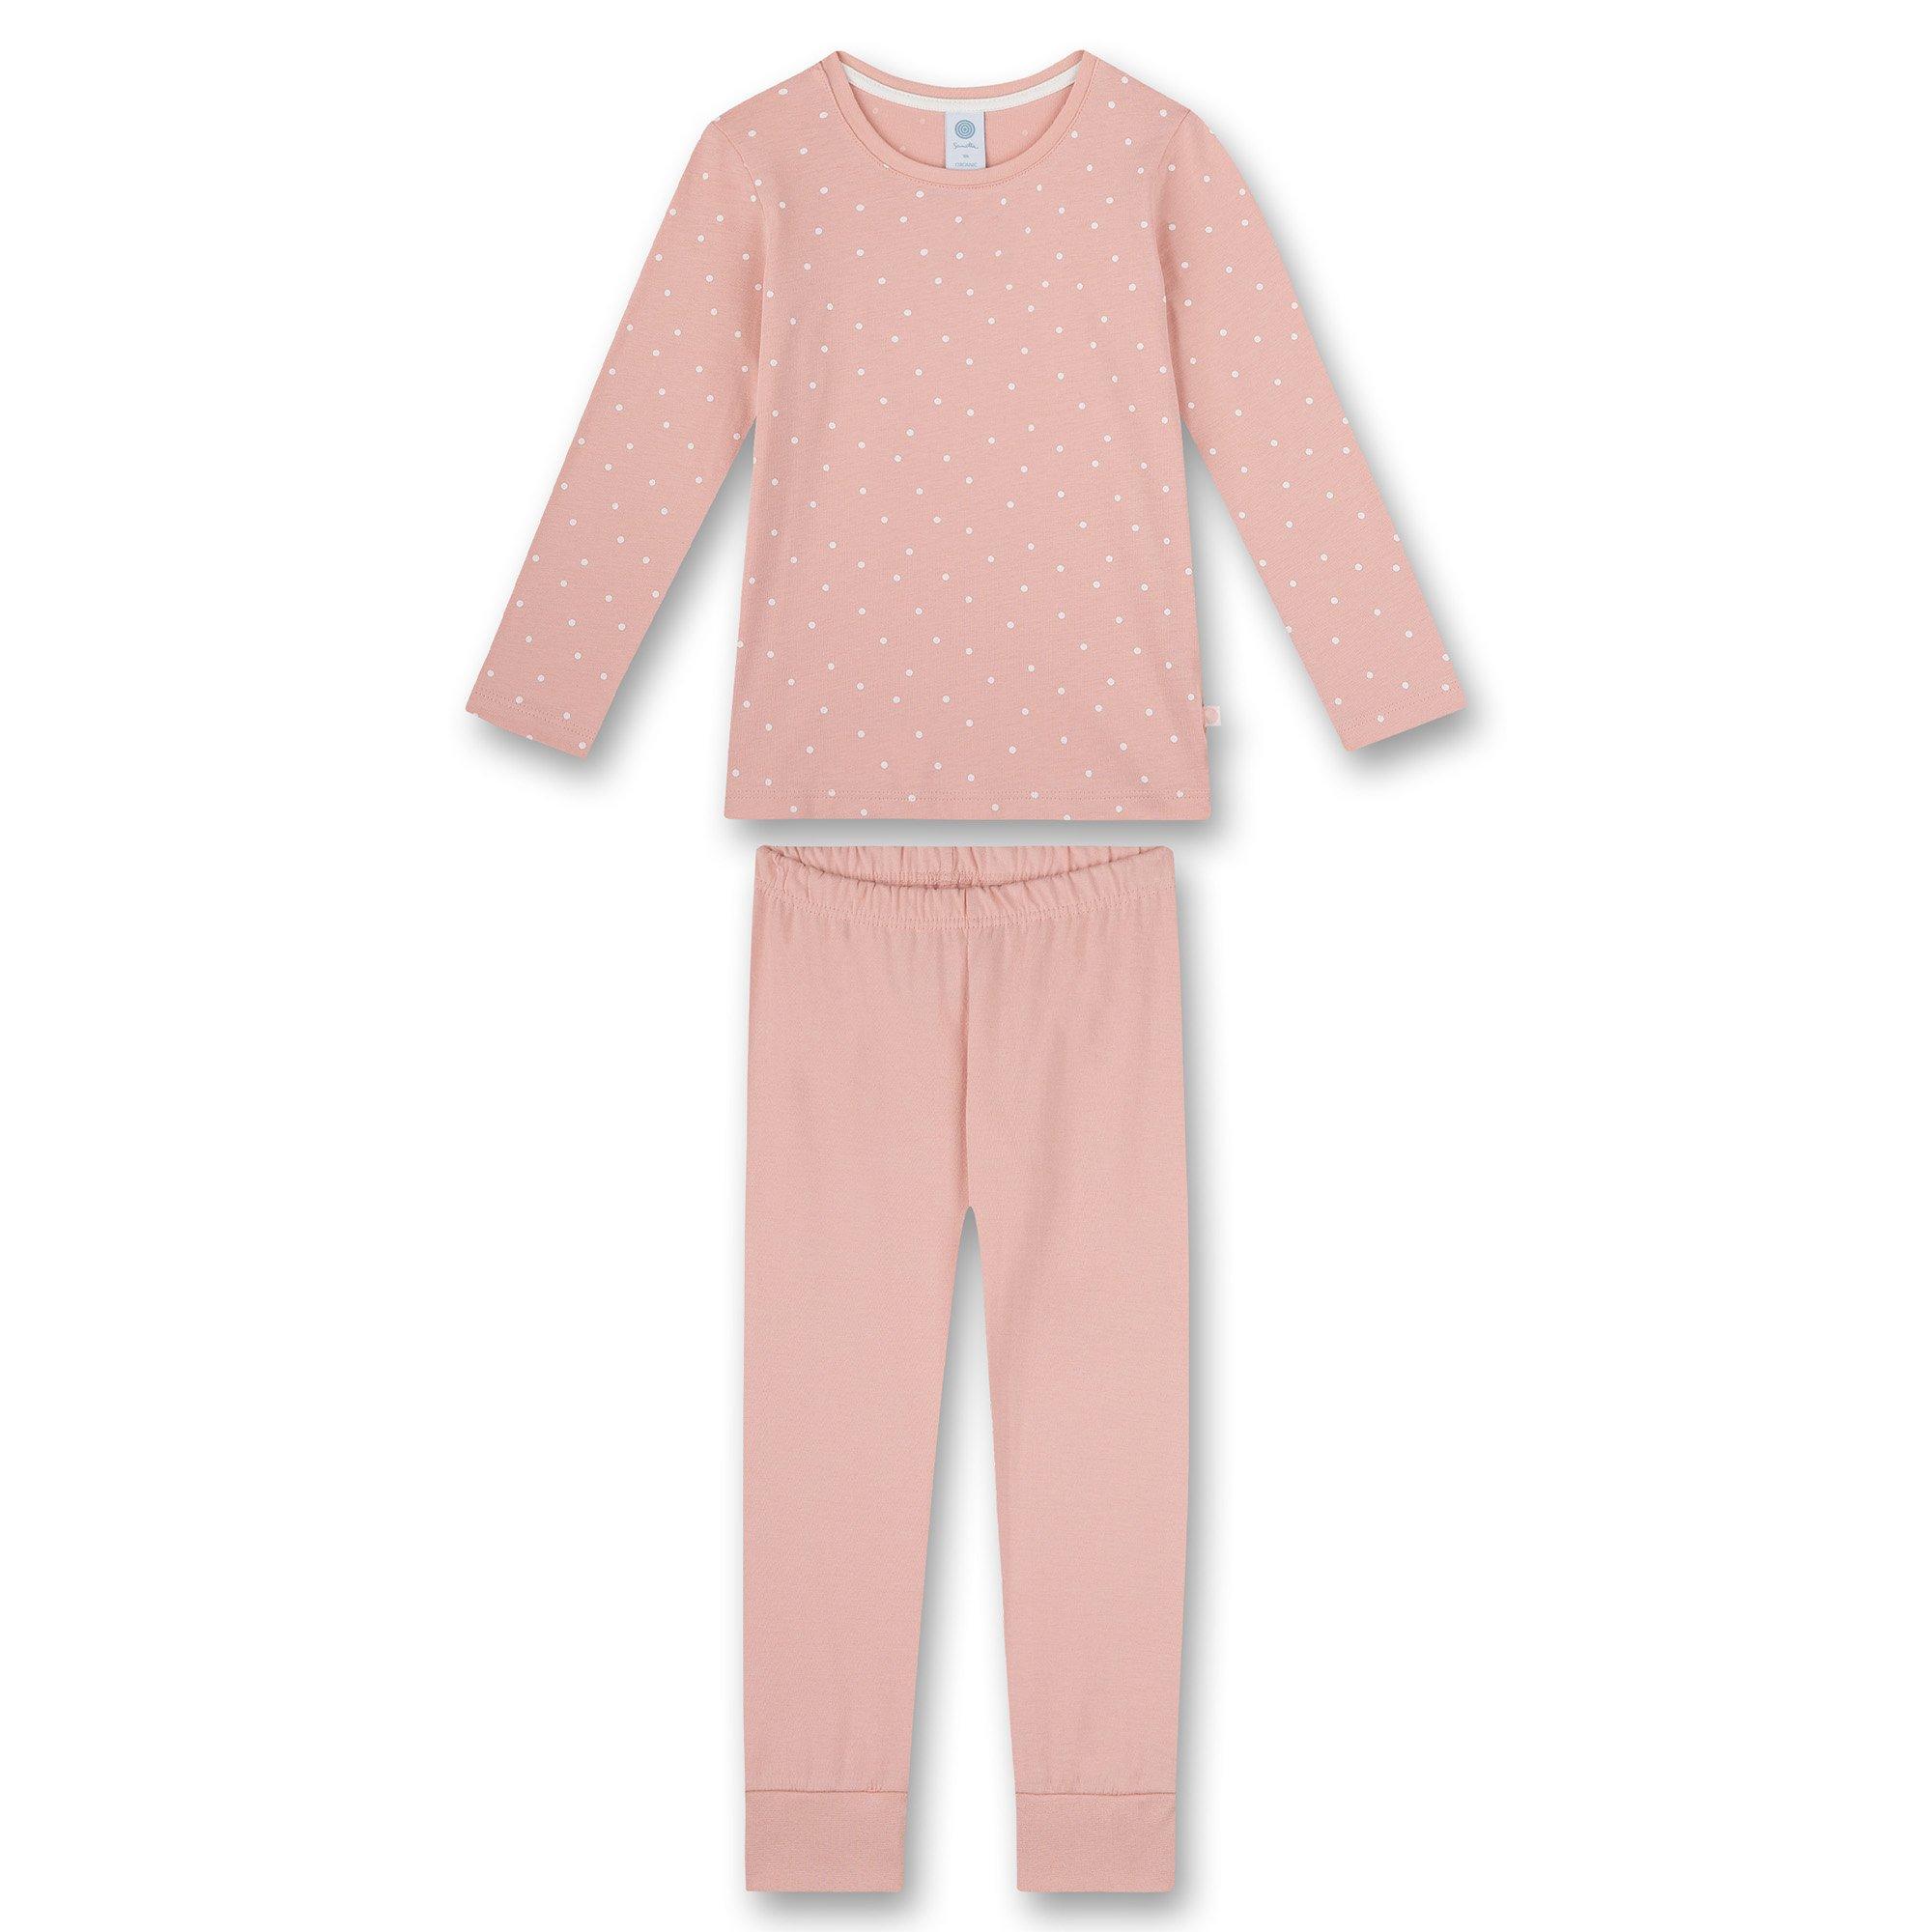 Sanetta  Pyjama  Confortable à porter 